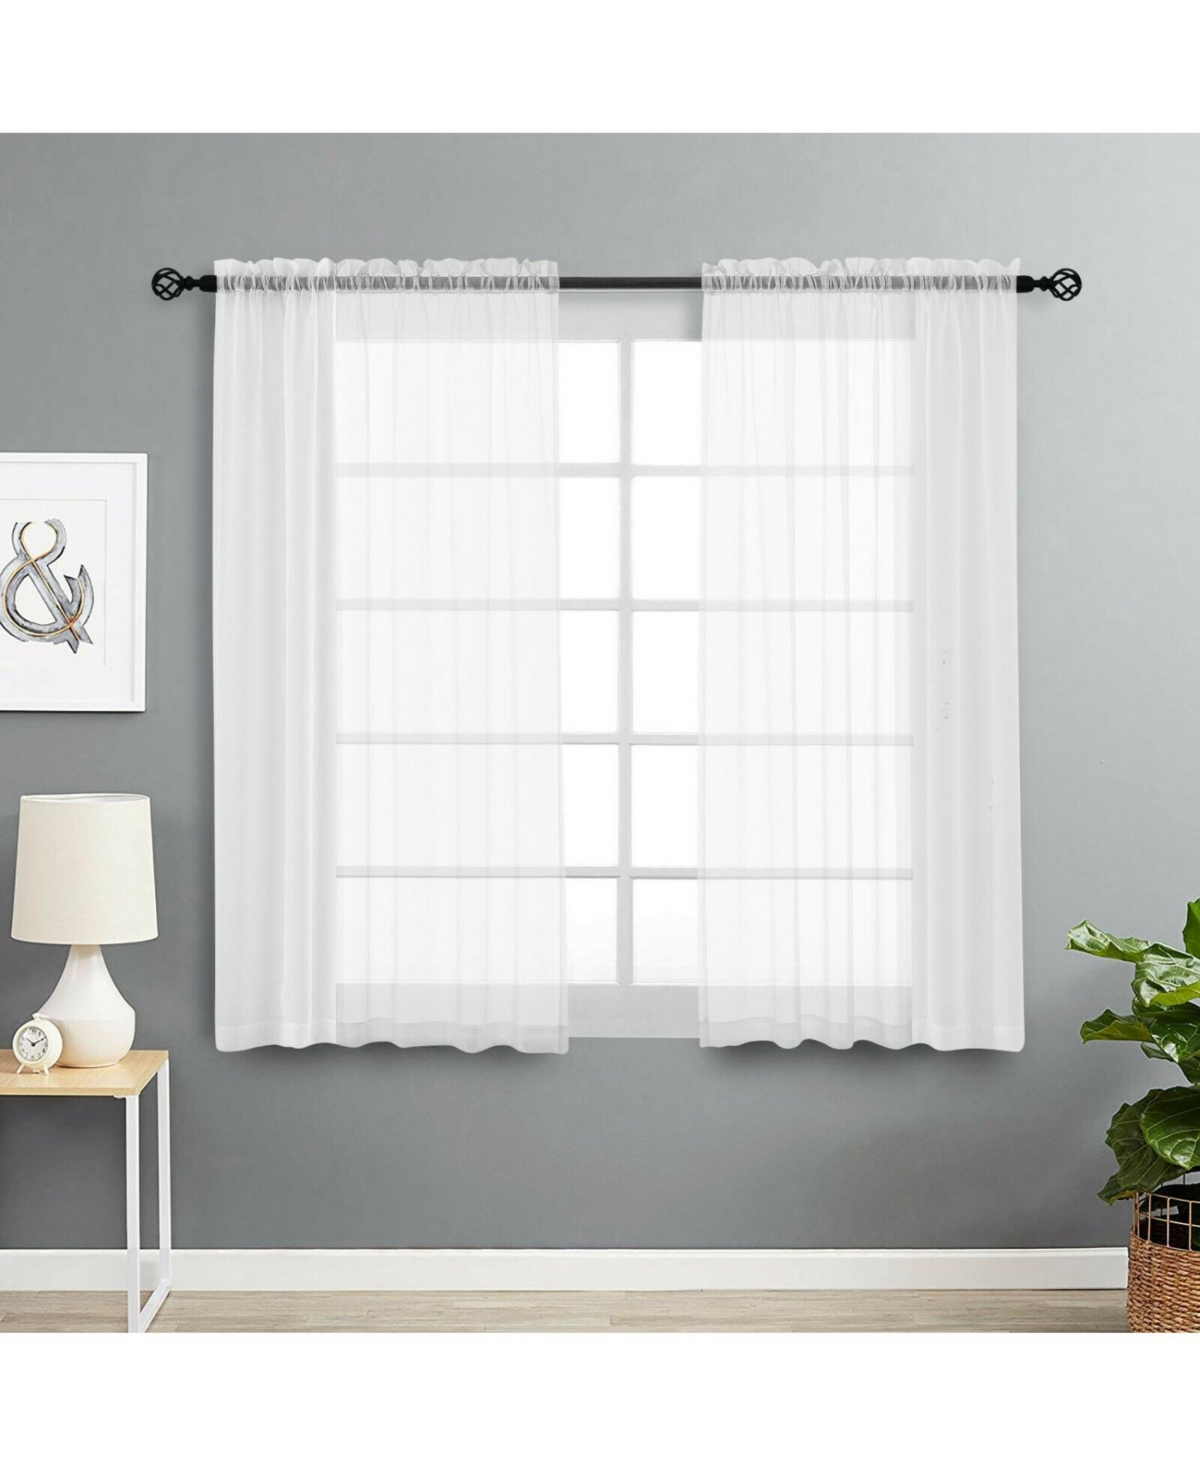 2 Pack Basic Home Rod Pocket Sheer Voile Window Curtains - Black